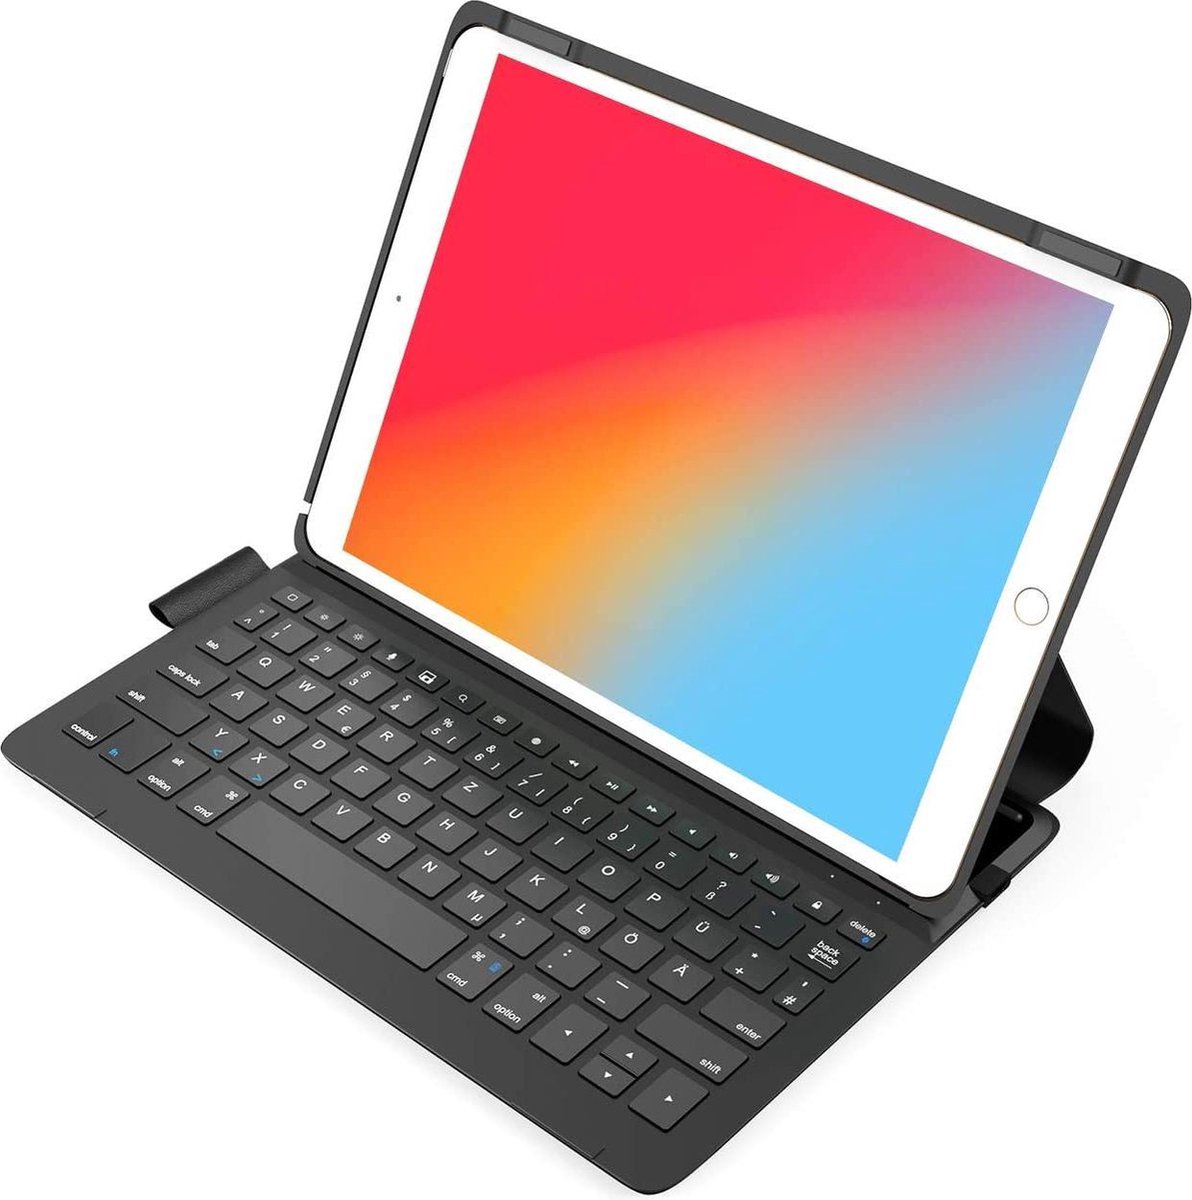 Ultralichte toetsenbordhoes voor iPad 2020 (8e generatie) / iPad 2019 (7e generatie) 10,2 inch, iPad Air 3 en iPad Pro 10.5, met Smart Power knop, QWERTZ, BK2006